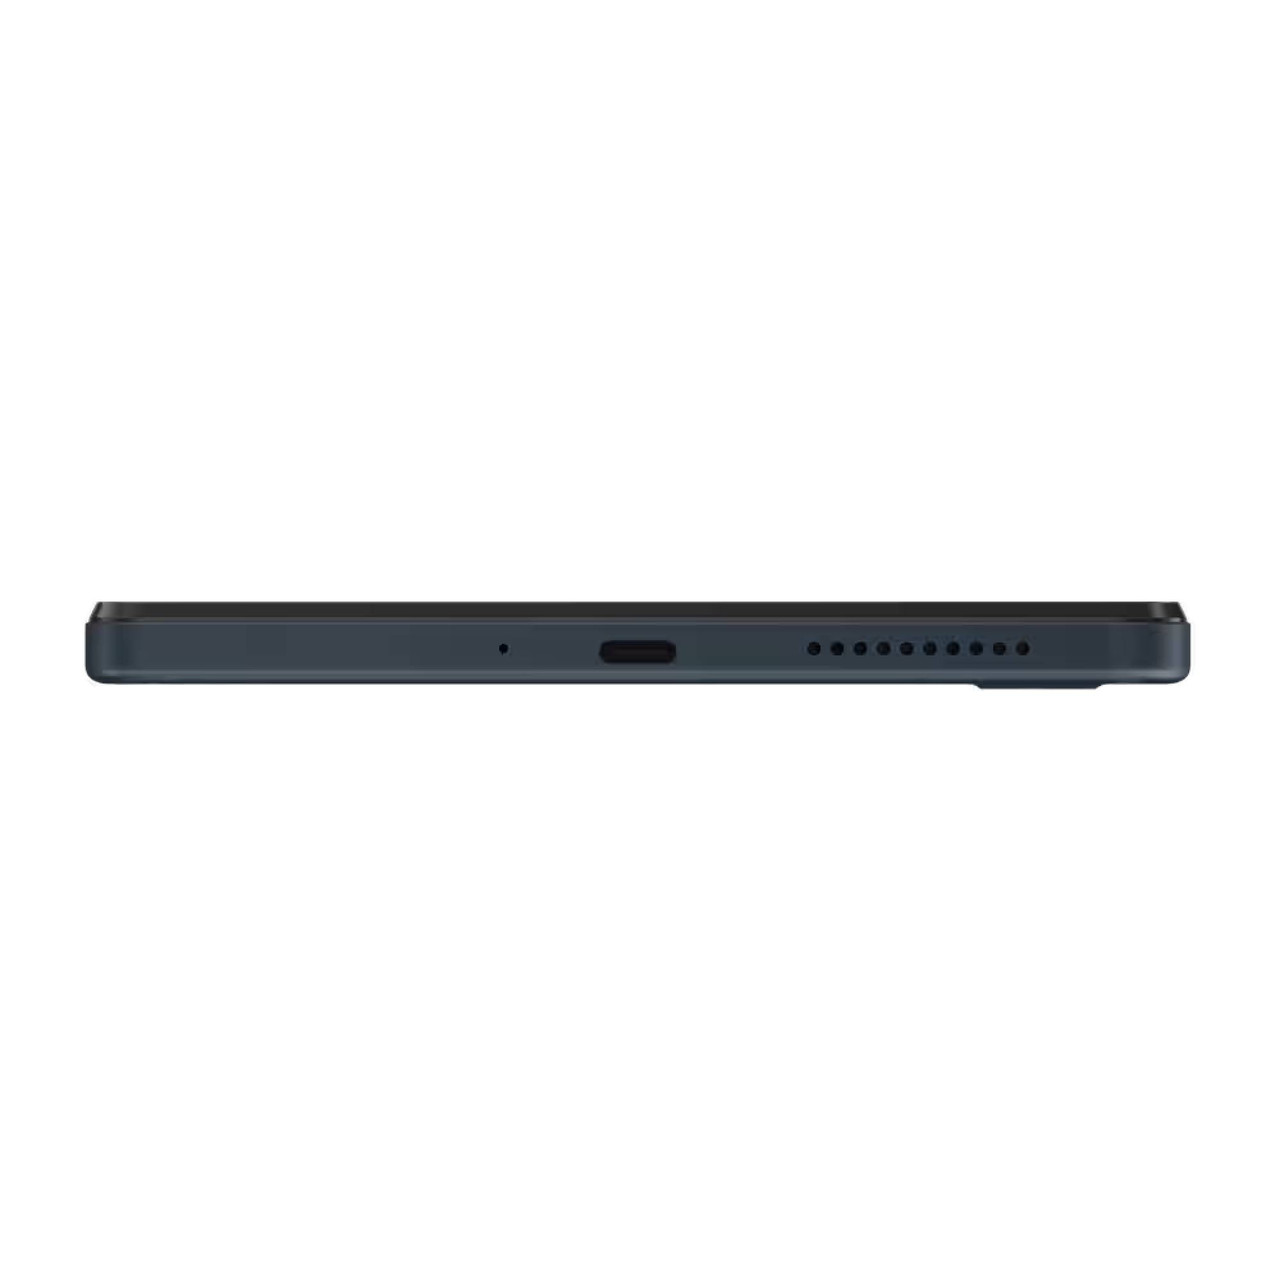 Lenovo TB300Fu M8 8" Touch Tablet MediaTek Helio A22 2GB RAM 32GB SSD Android OS | ZABW0083US | Manufacturer Refurbished